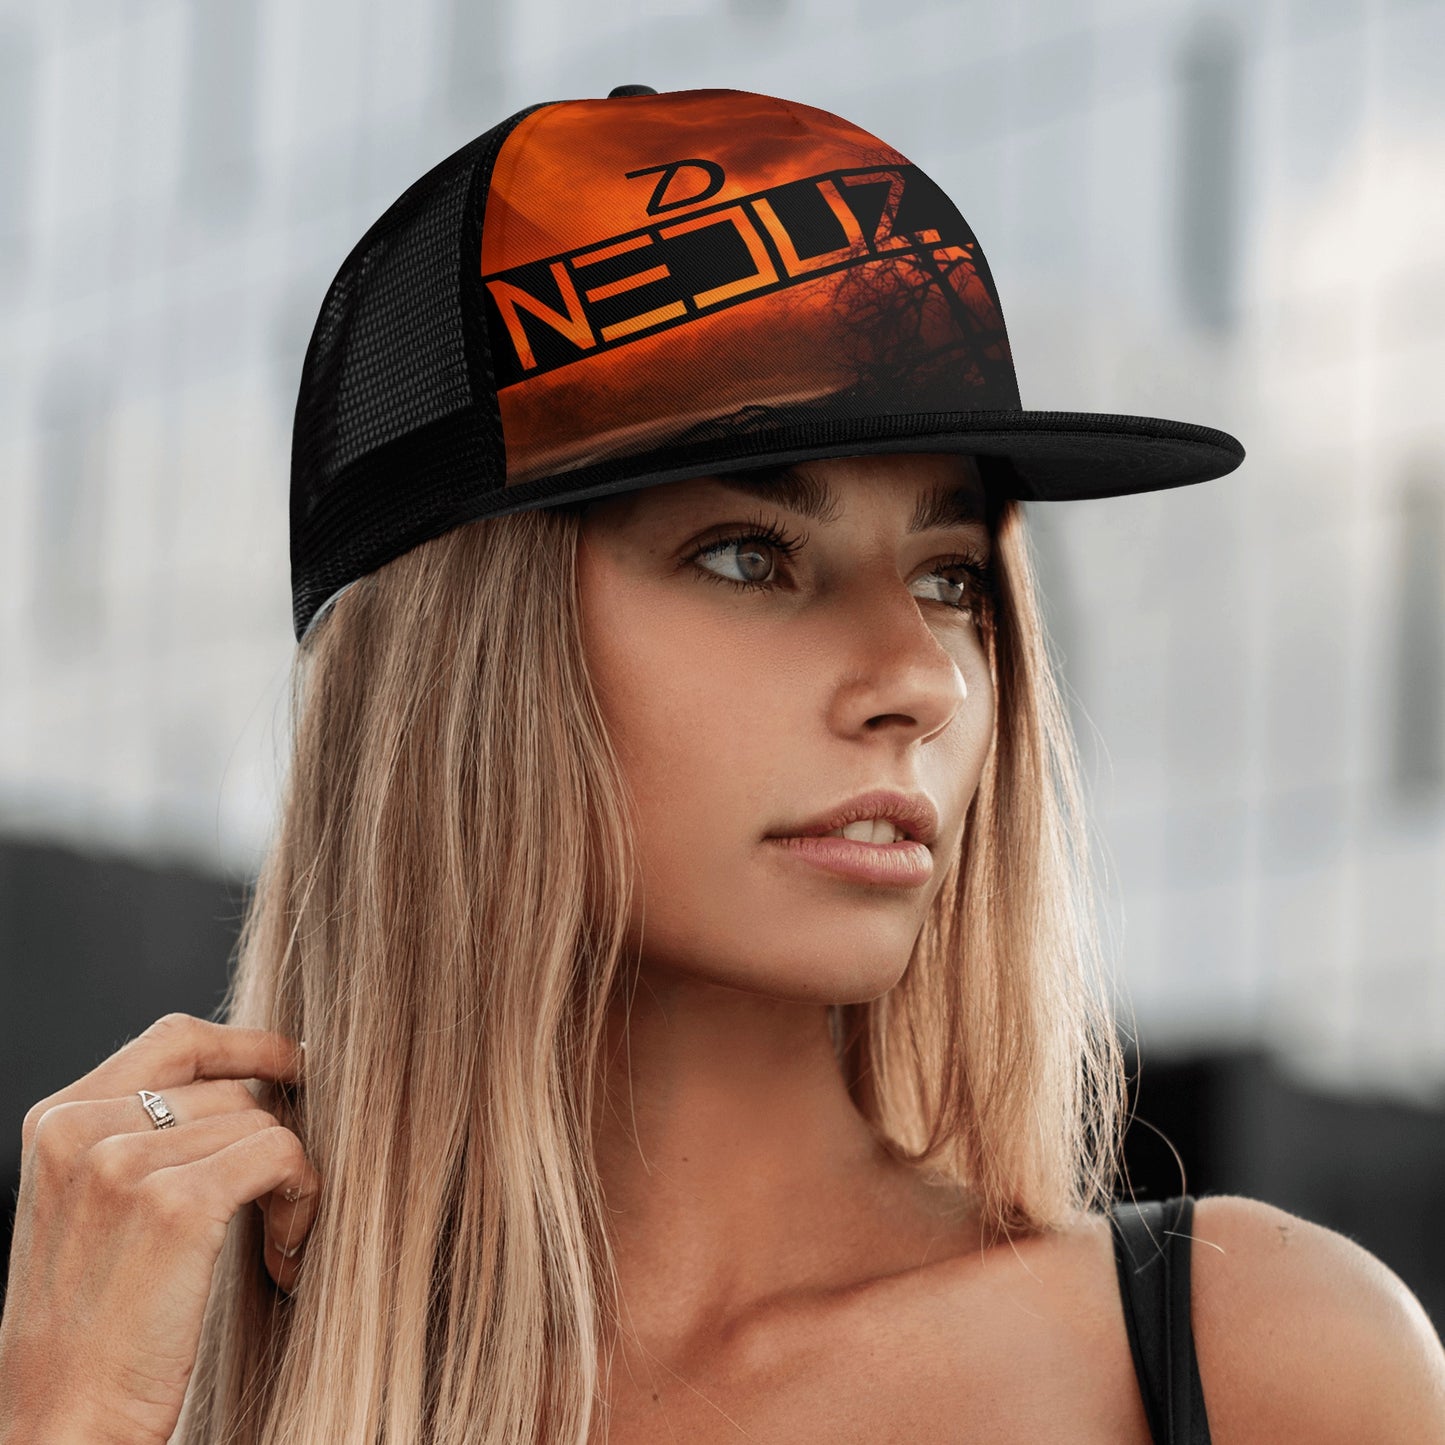 Neduz Crimson Sun Mesh Hip Hop Hat: Show Off Your Style with Our Unique and Stylish Design